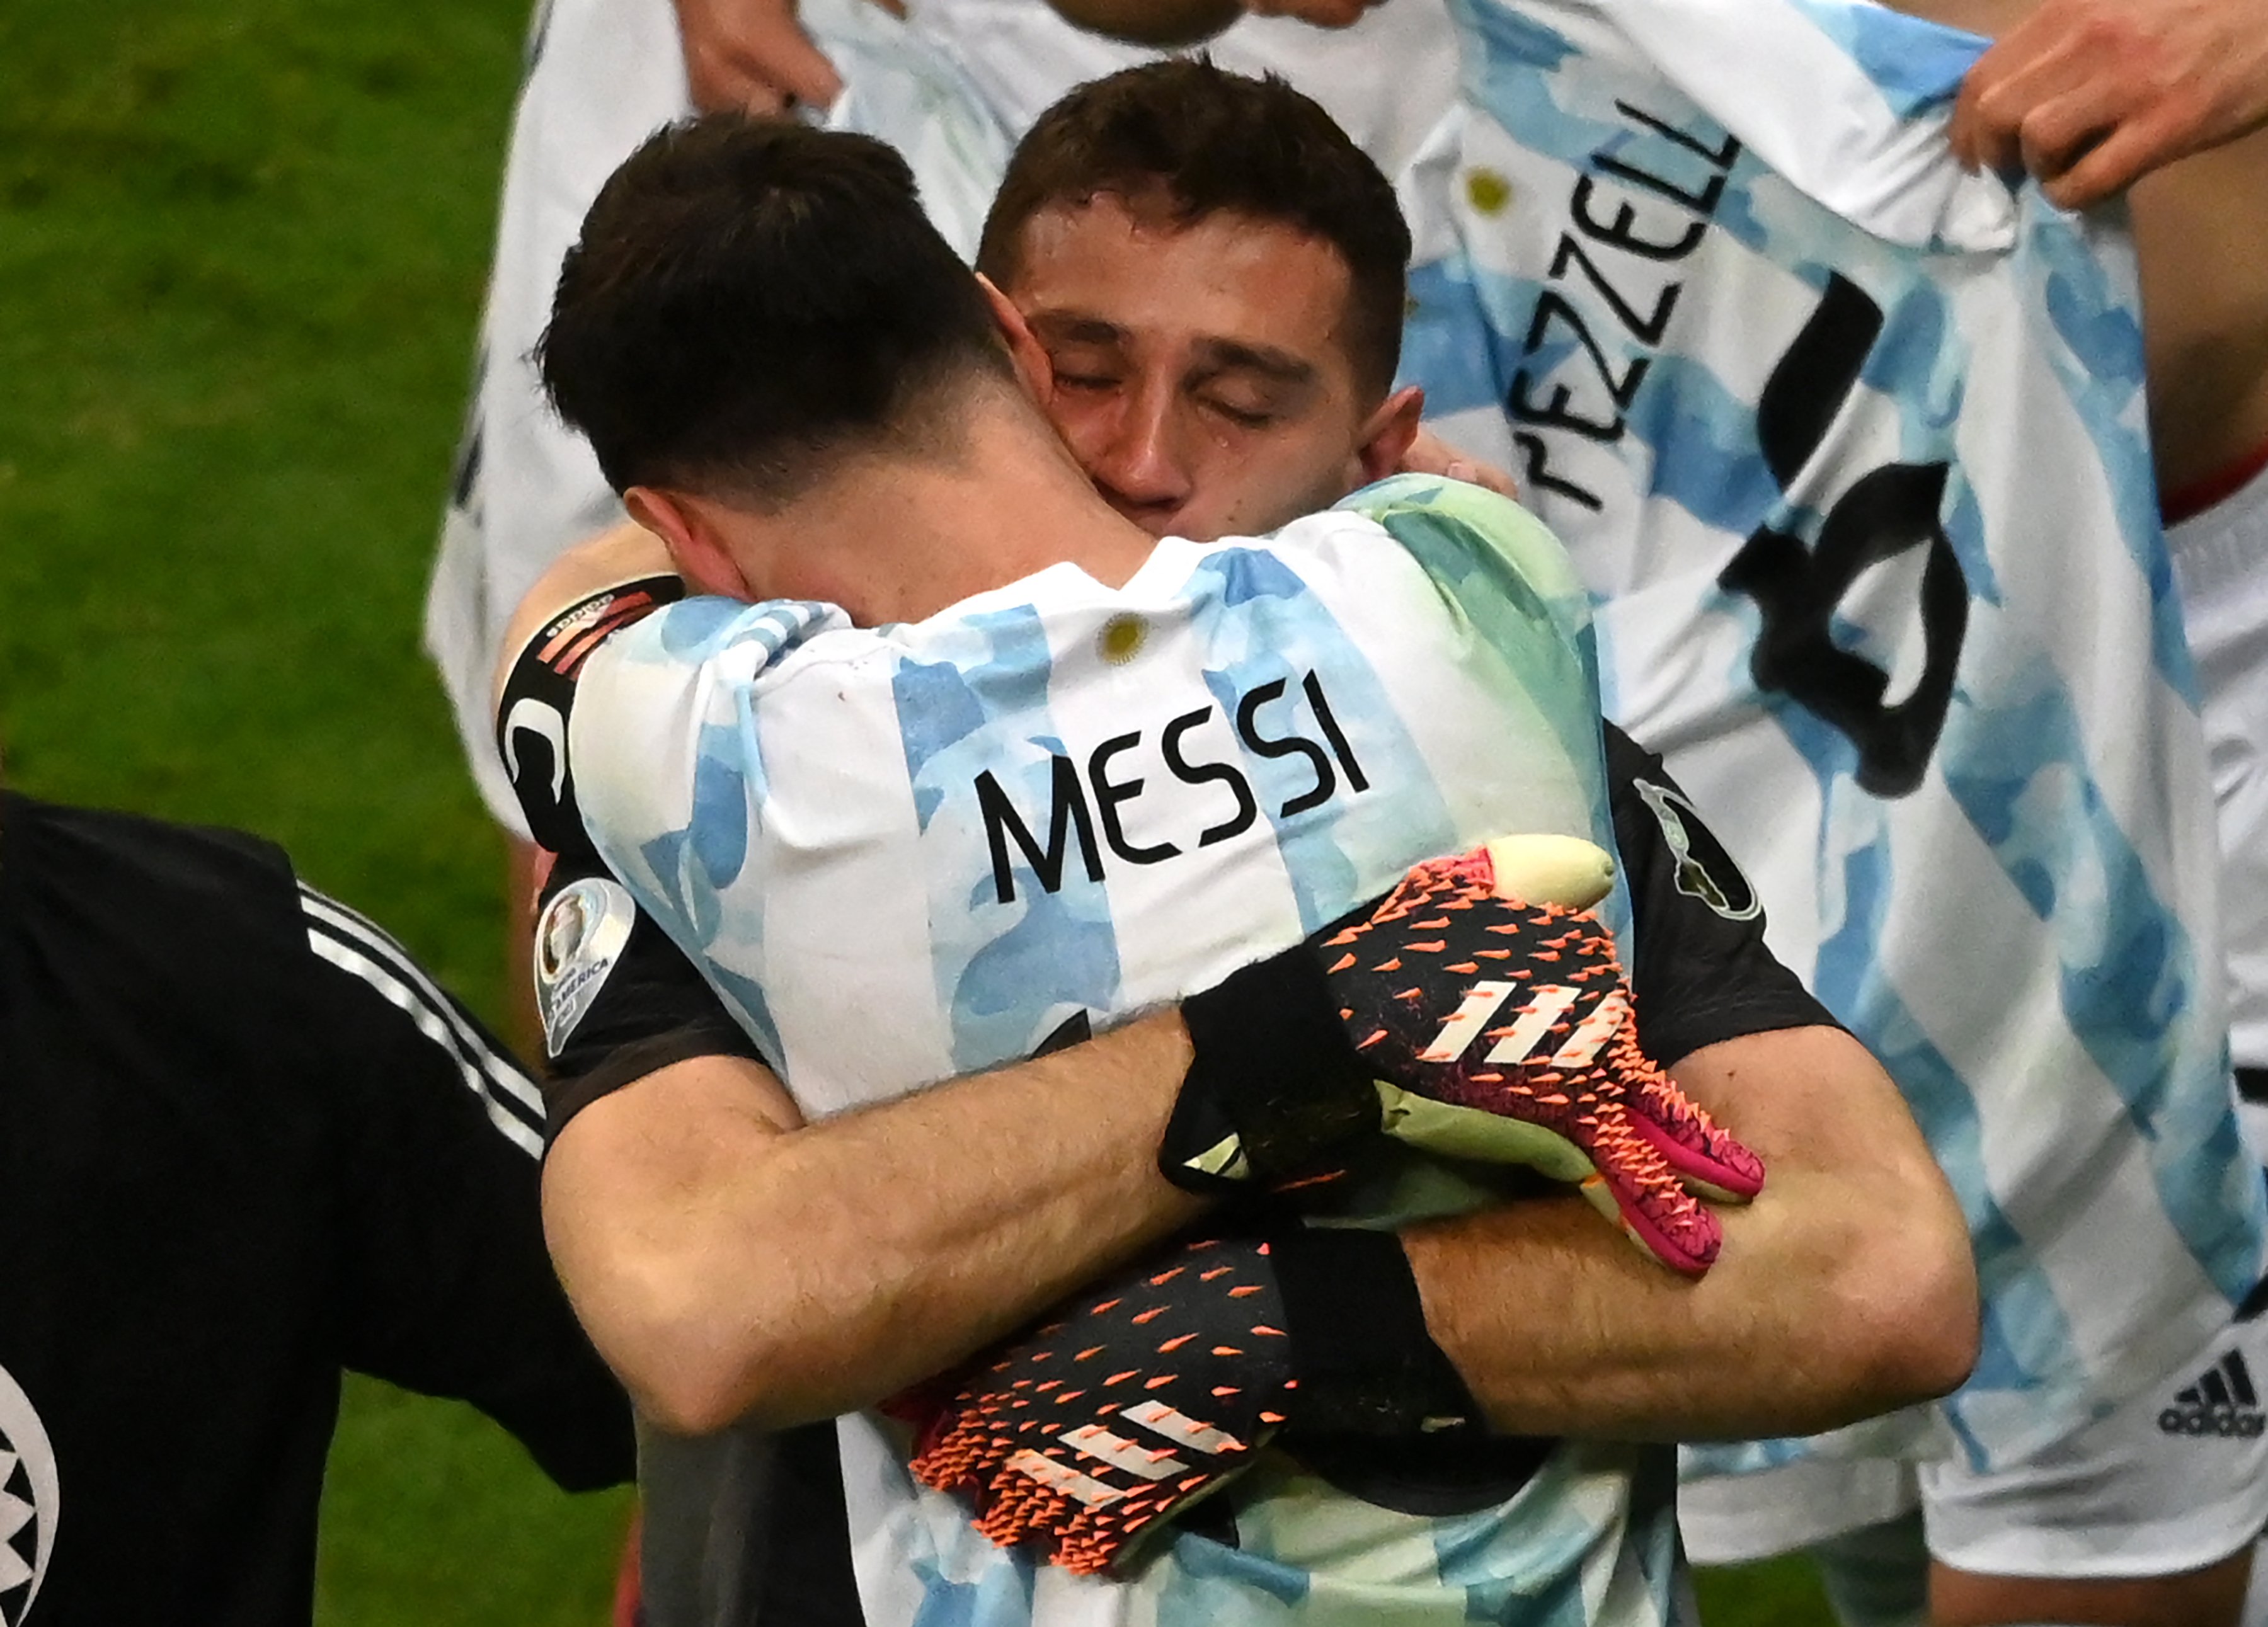 Copa America Dream Final: Its Argentina (Messi) vs Brazil (Neymar)